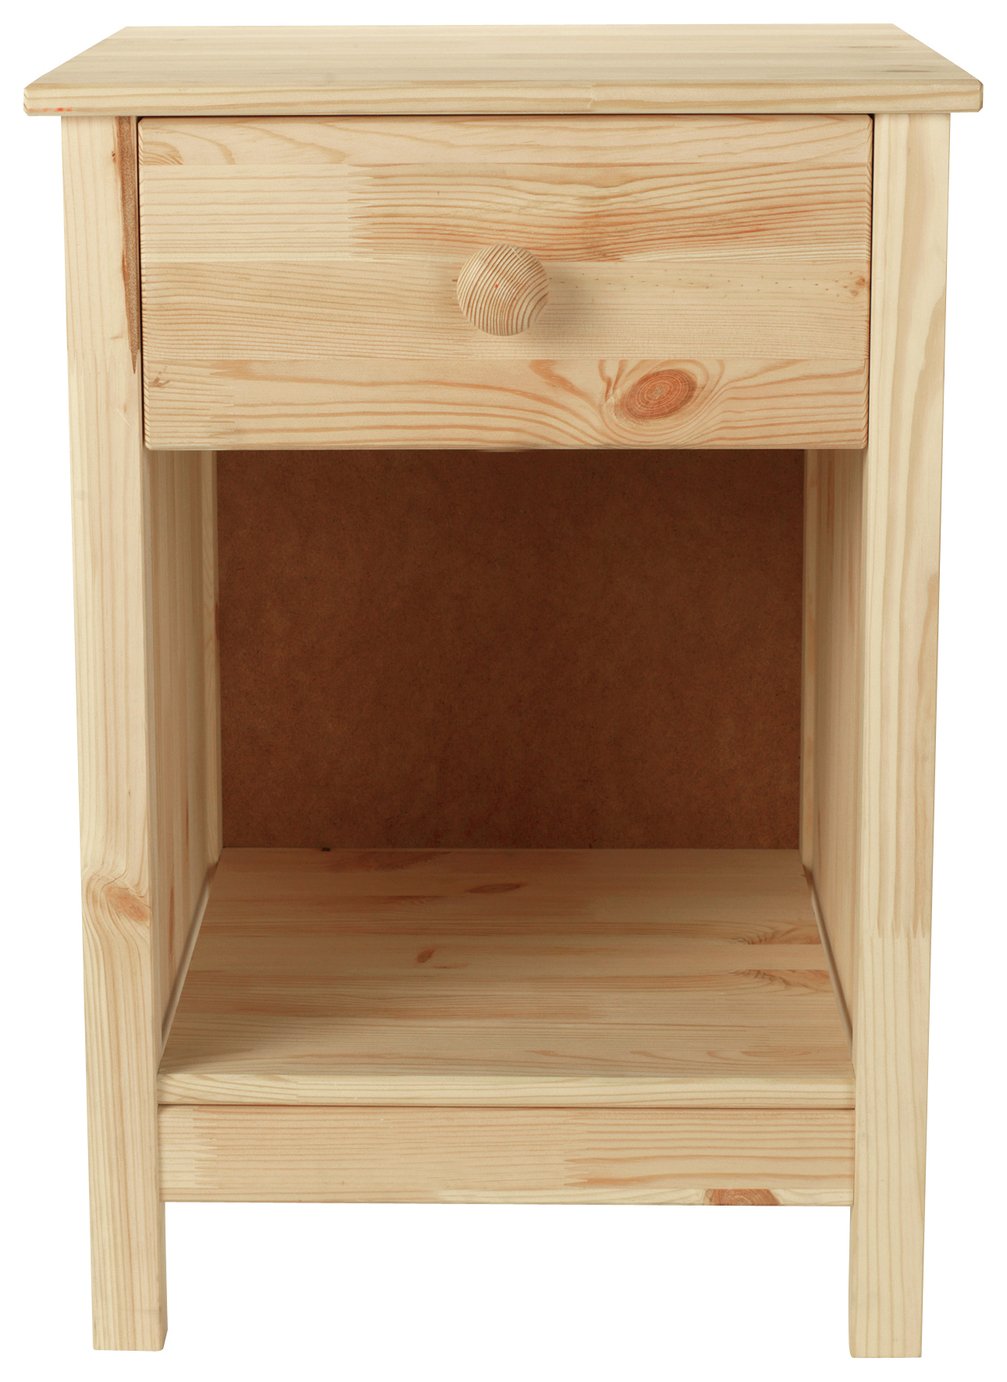 Argos Home Scandinavia Pine 1 Drawer Bedside Cabinet